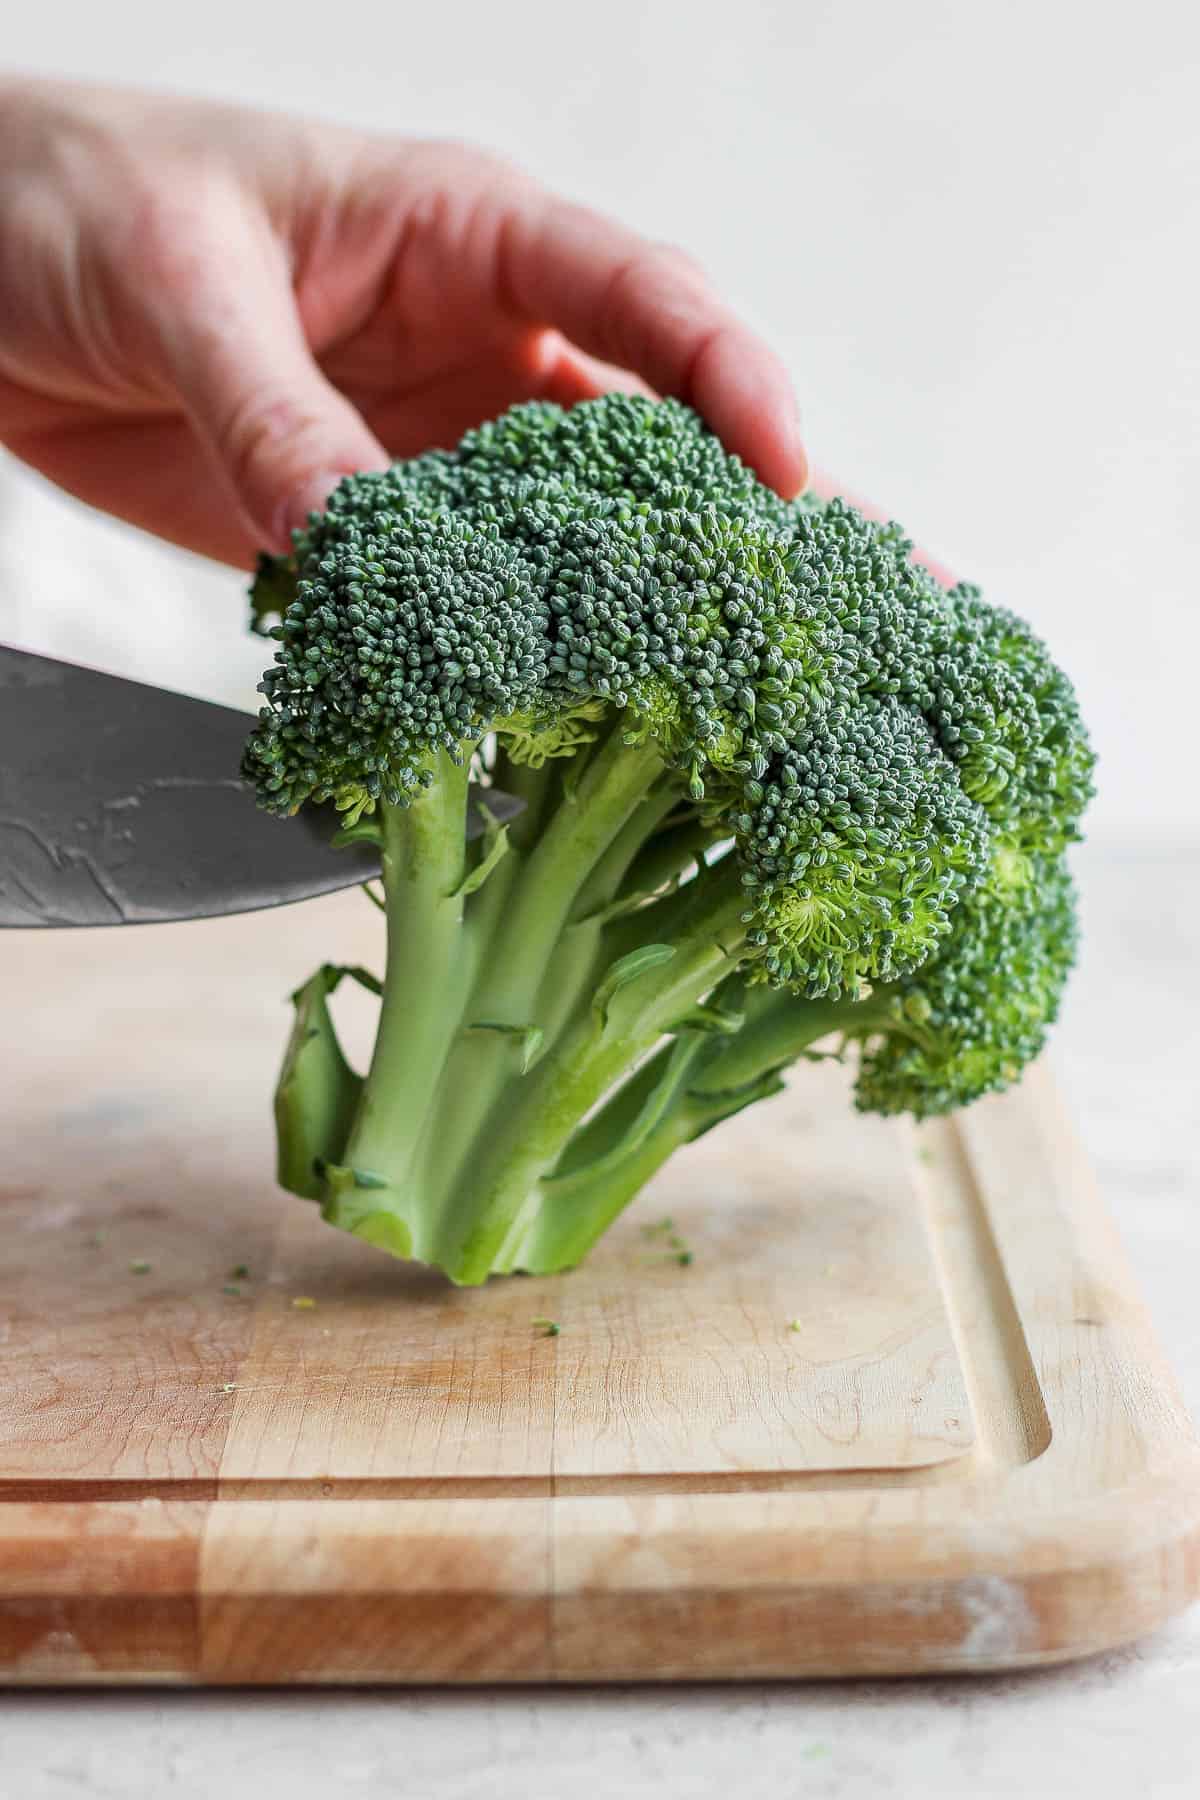 Slicing off broccoli